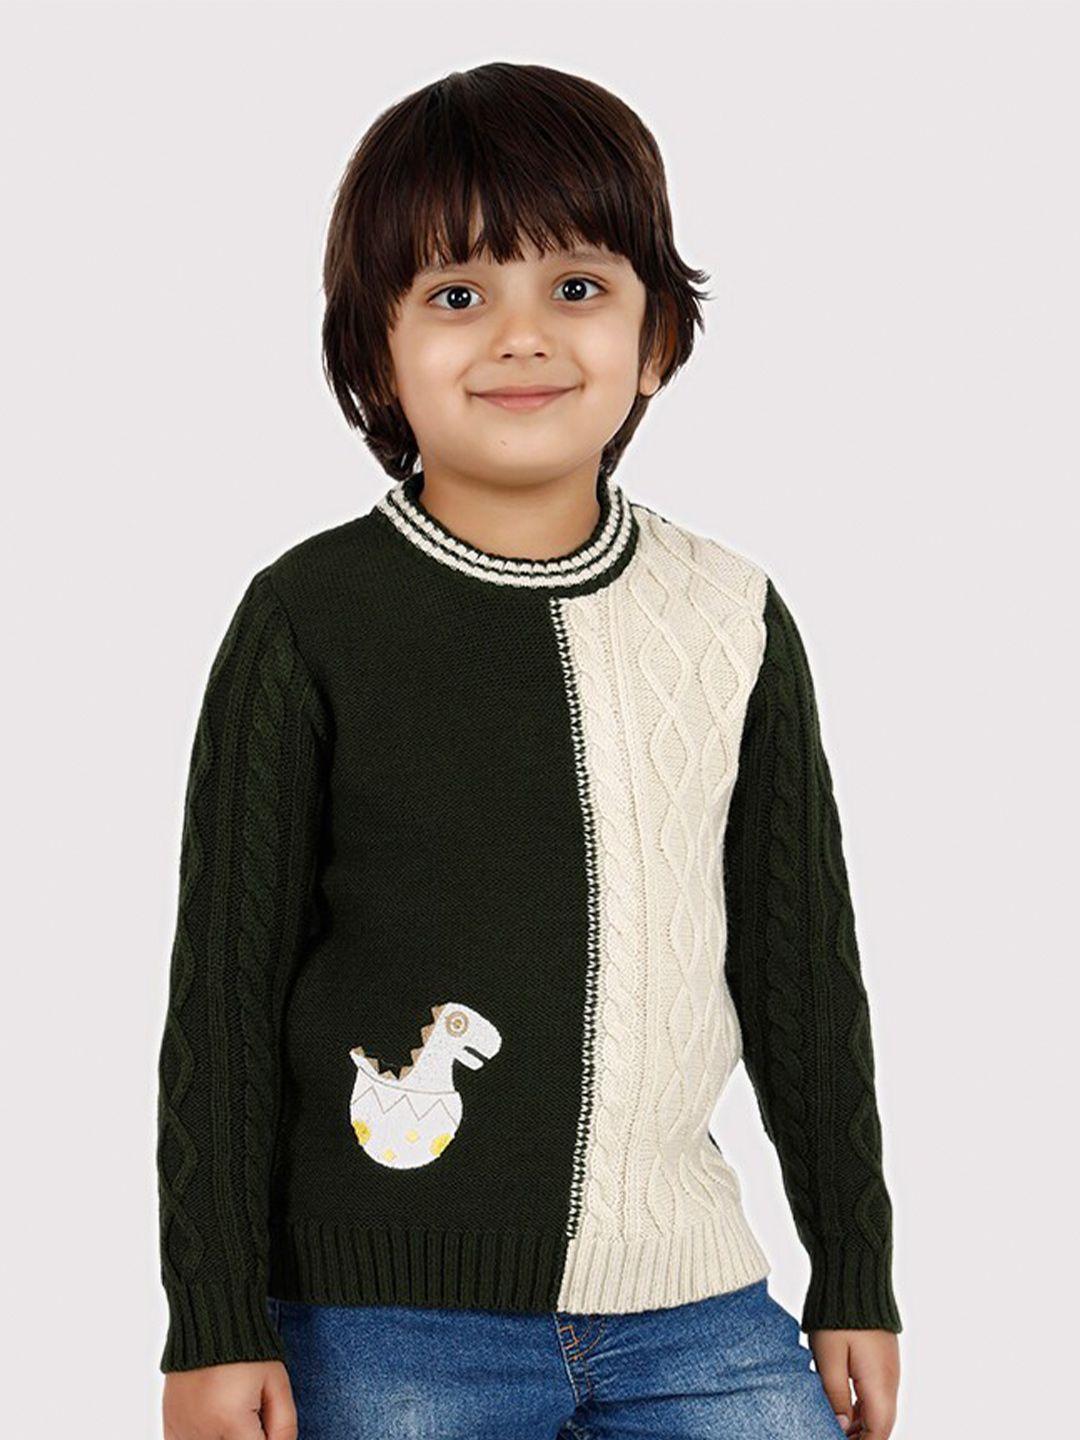 joe hazel boys colourblocked pullover sweater